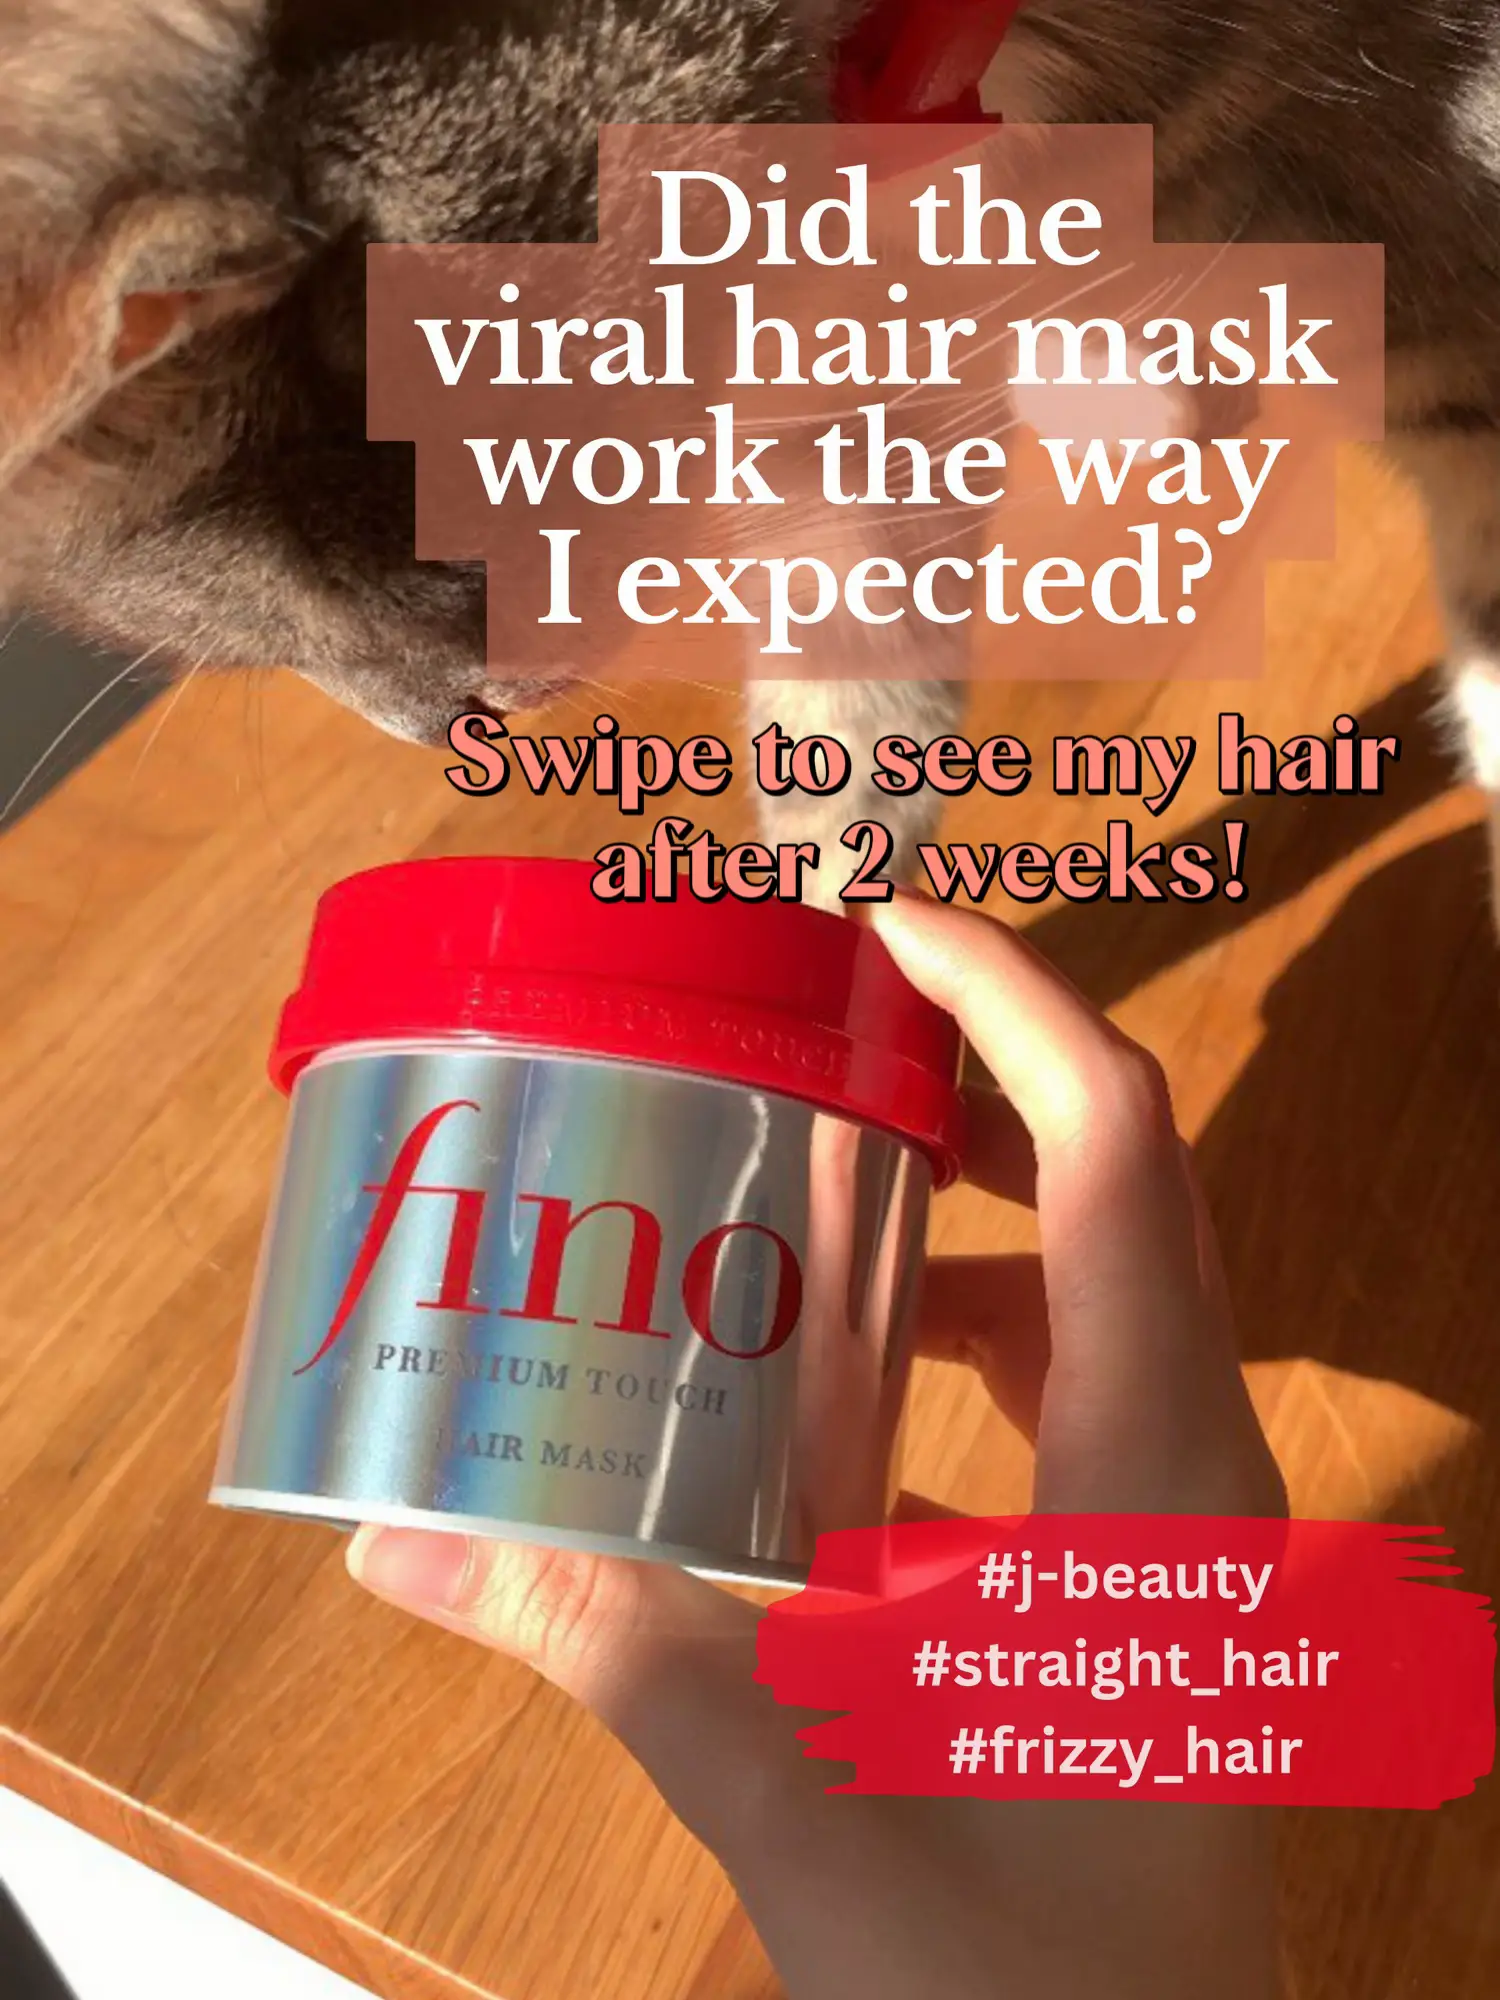 Fino Premium Touch Hair Essence Mask 230g | Shiseido